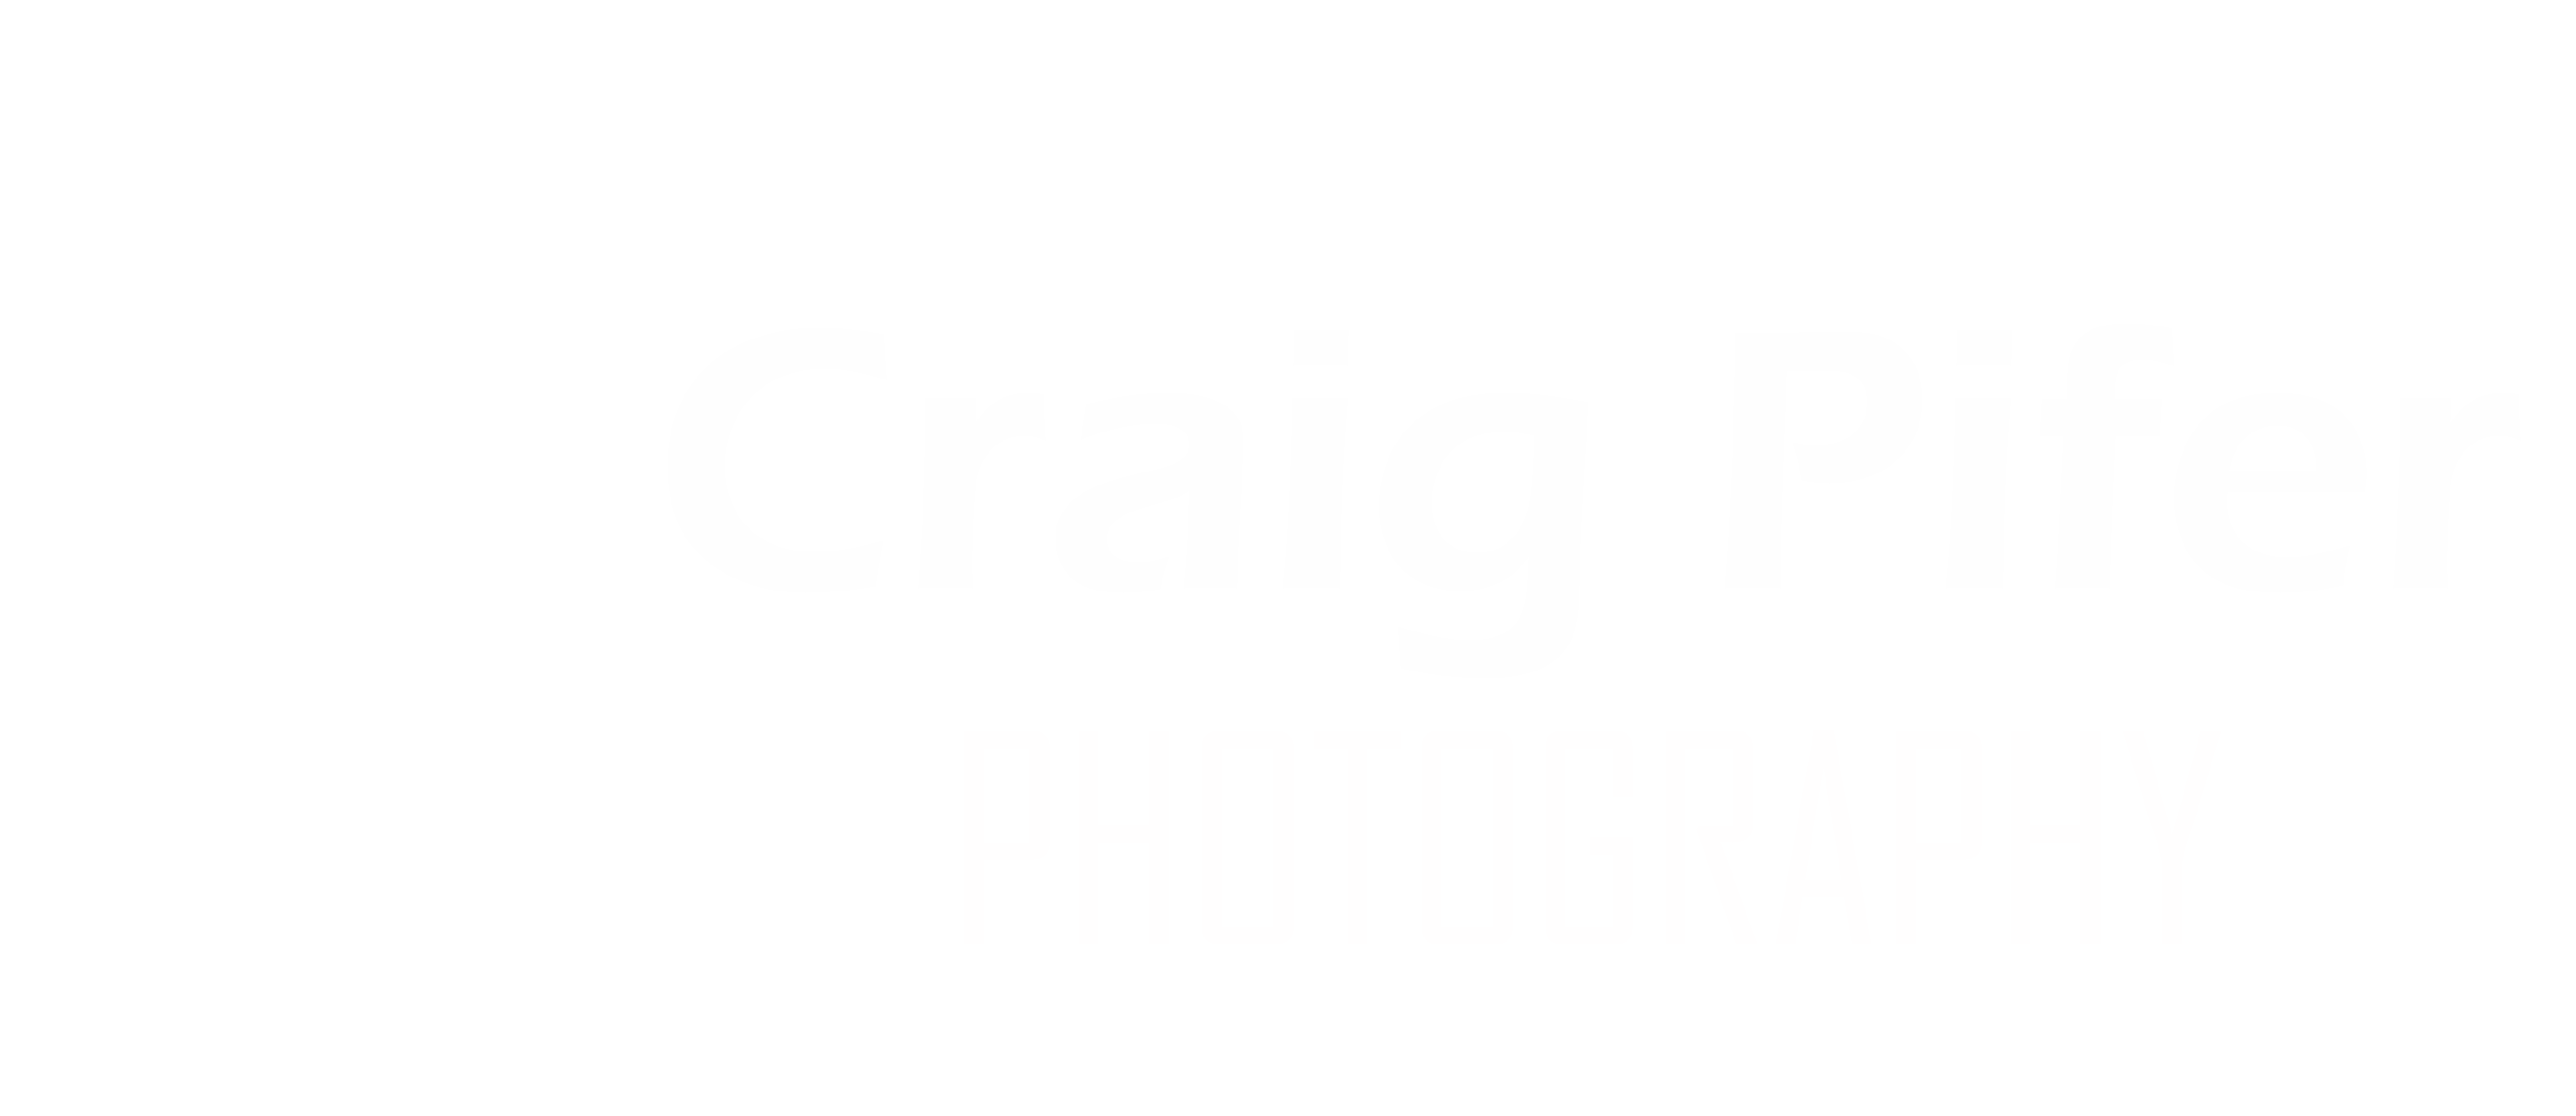 Craig Pifer Photography